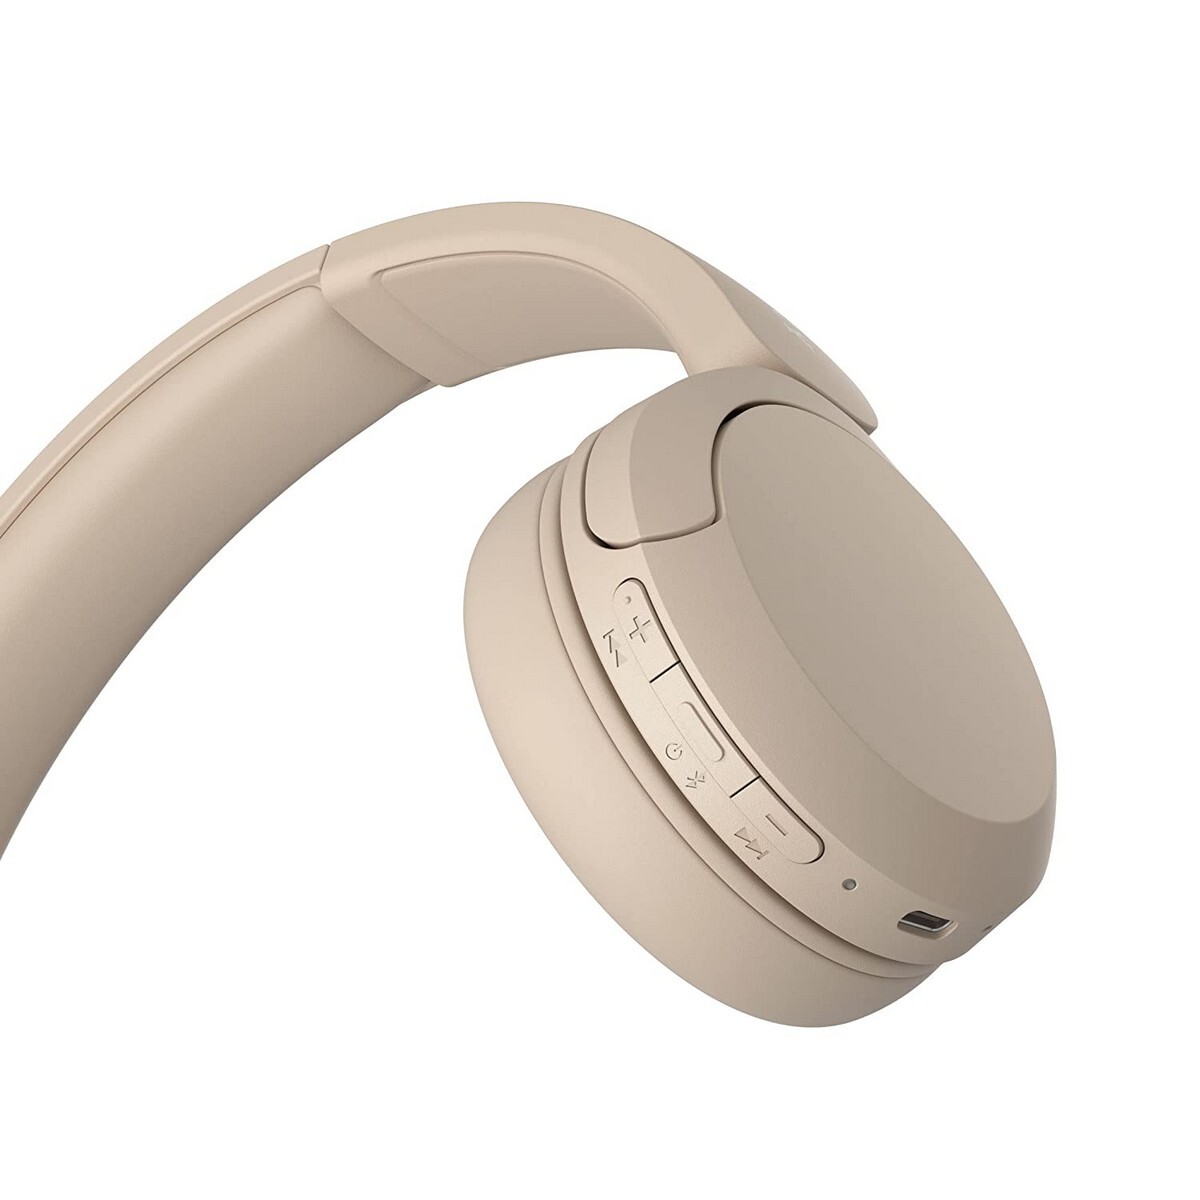 Sony Wireless Bluetooth Headphone WH-CH520 Beige